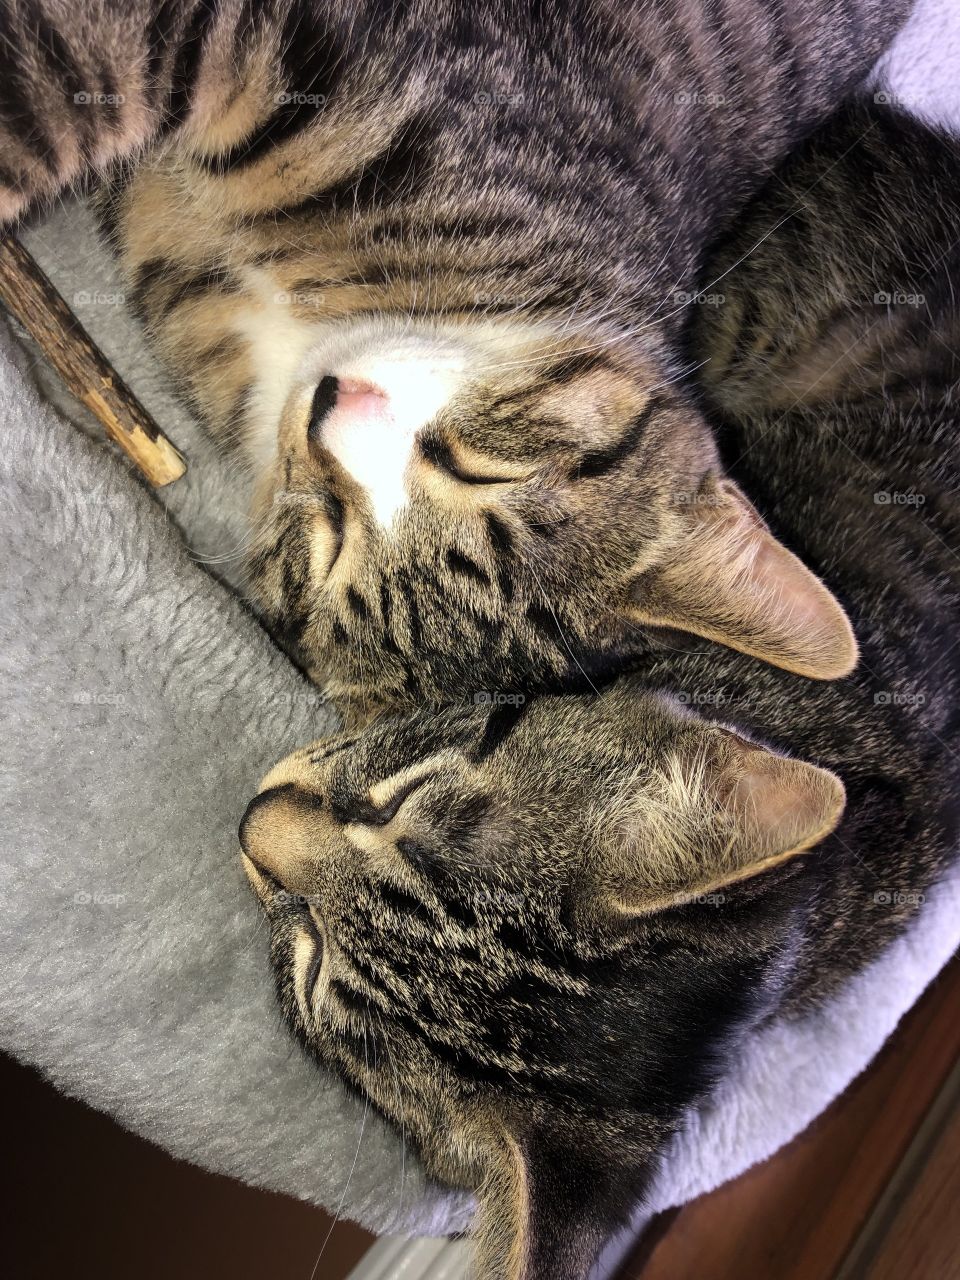 Kittens sleeping in their favorite soft spot